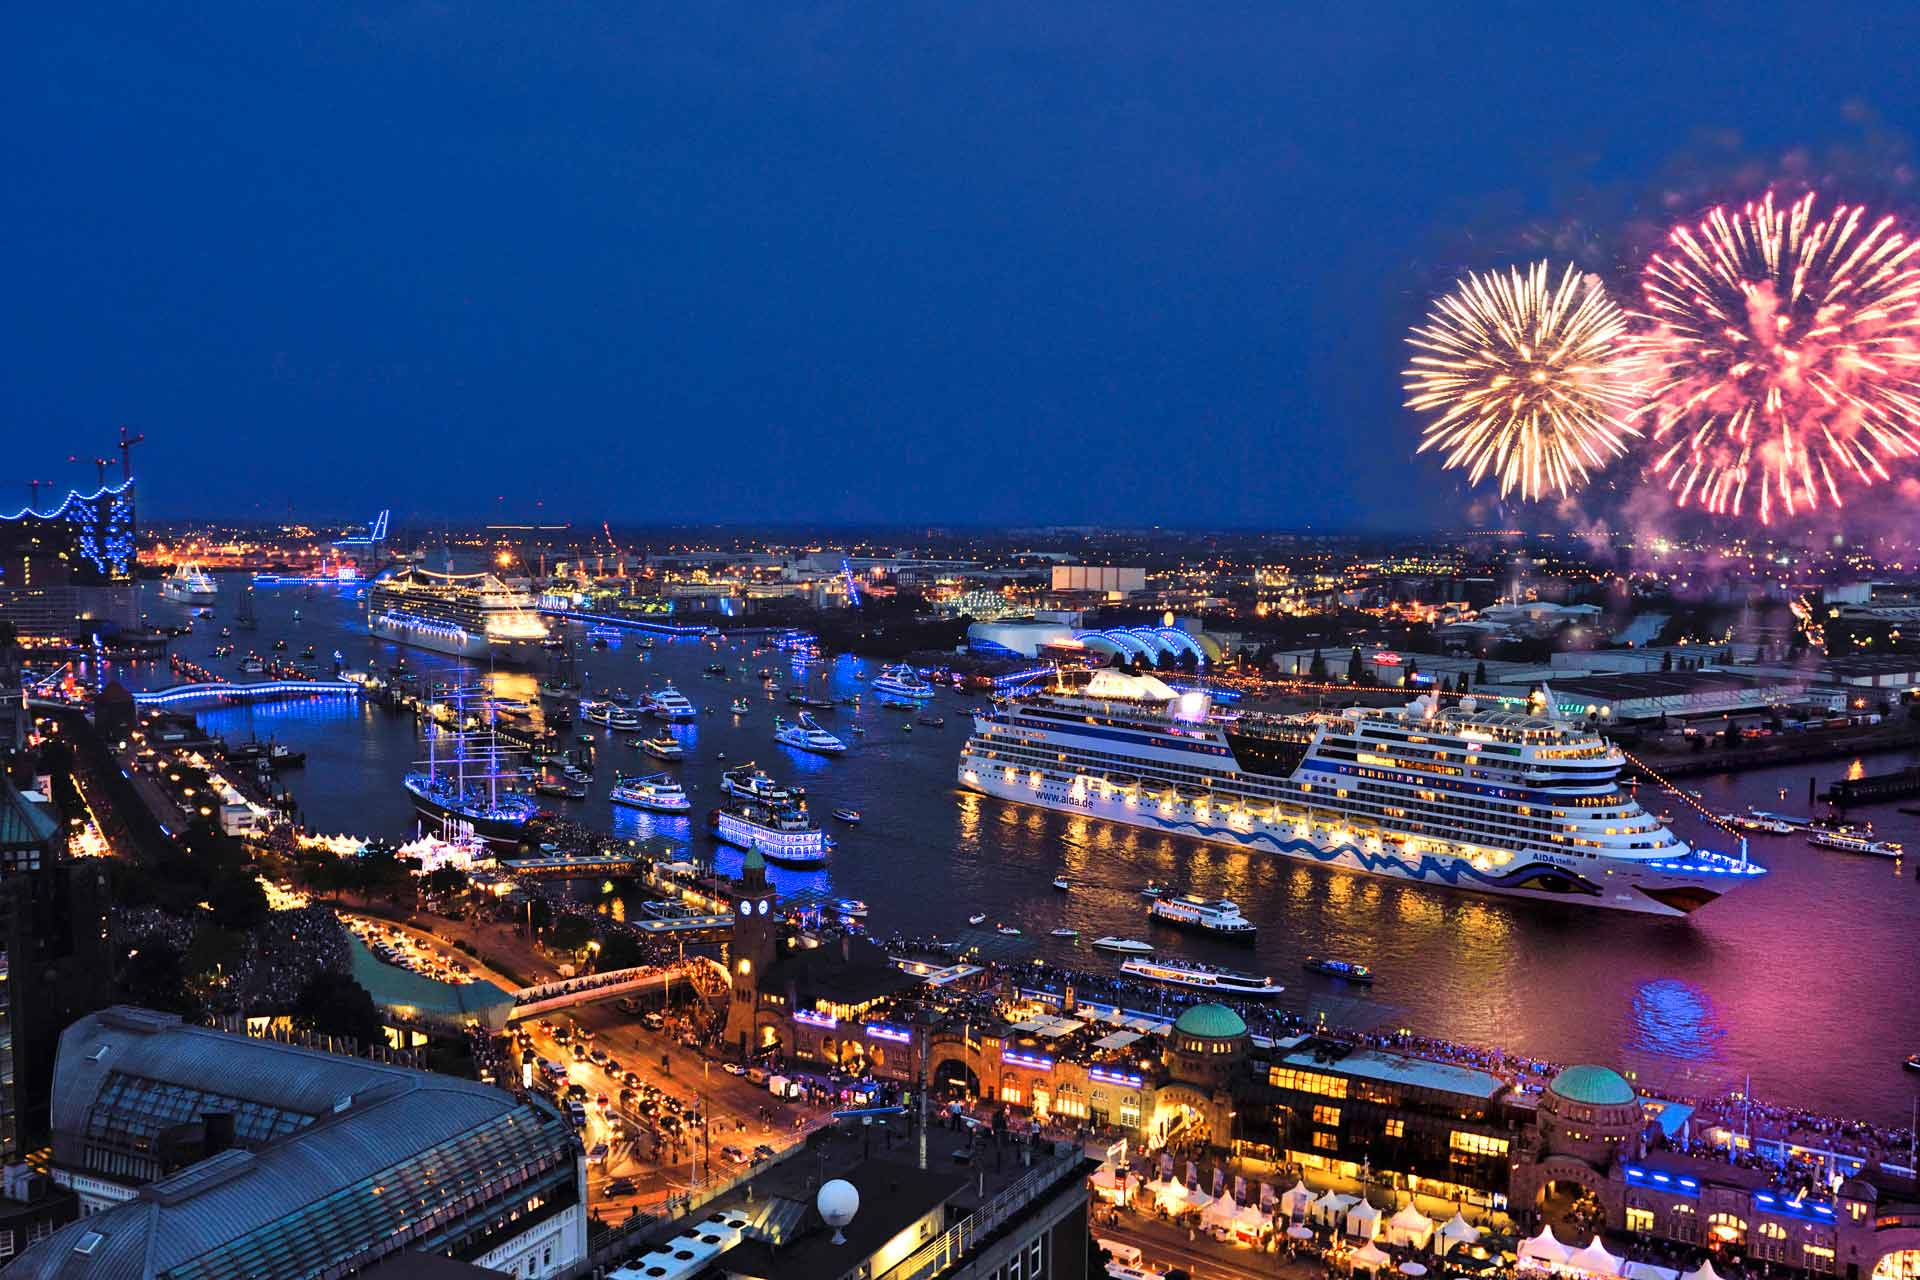 One of many events: Hamburg Cruise Days and Blue Port 2014